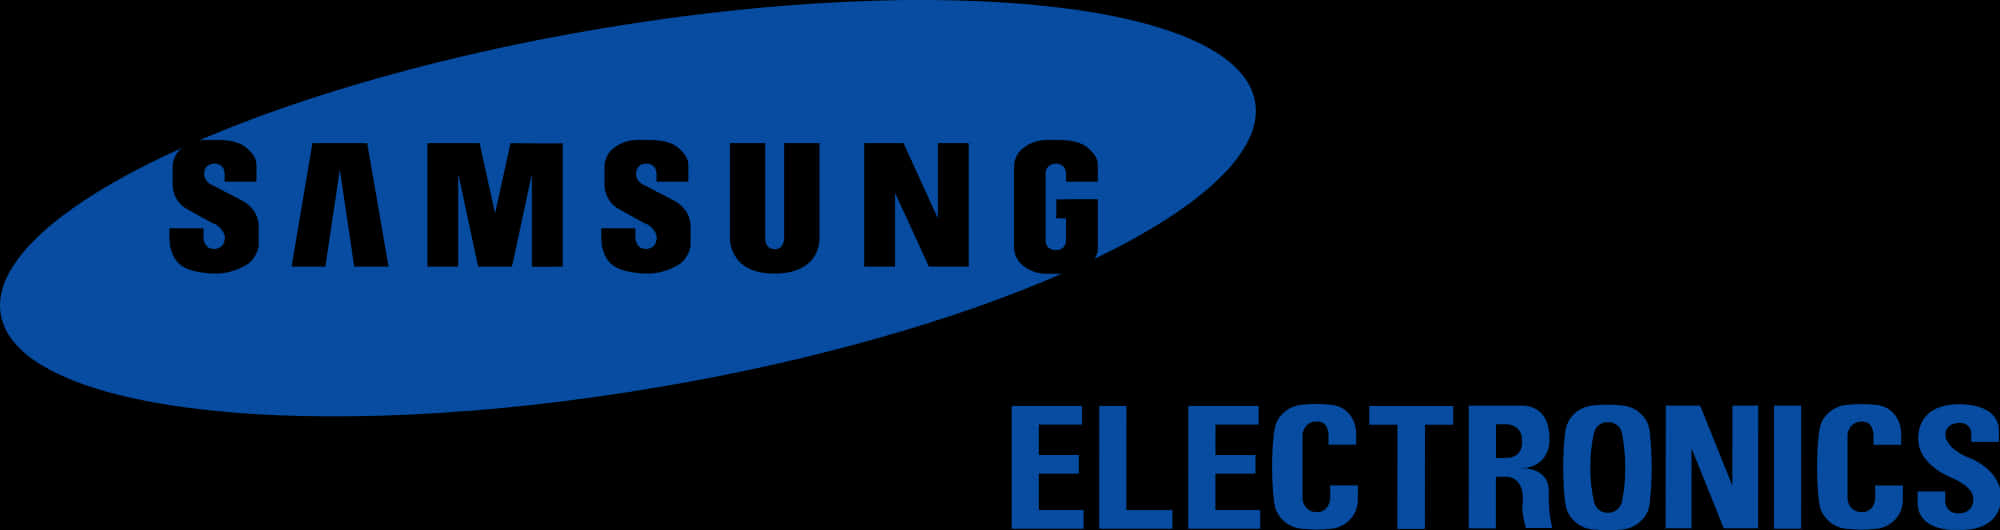 Samsung Electronics Logo Black Background PNG image